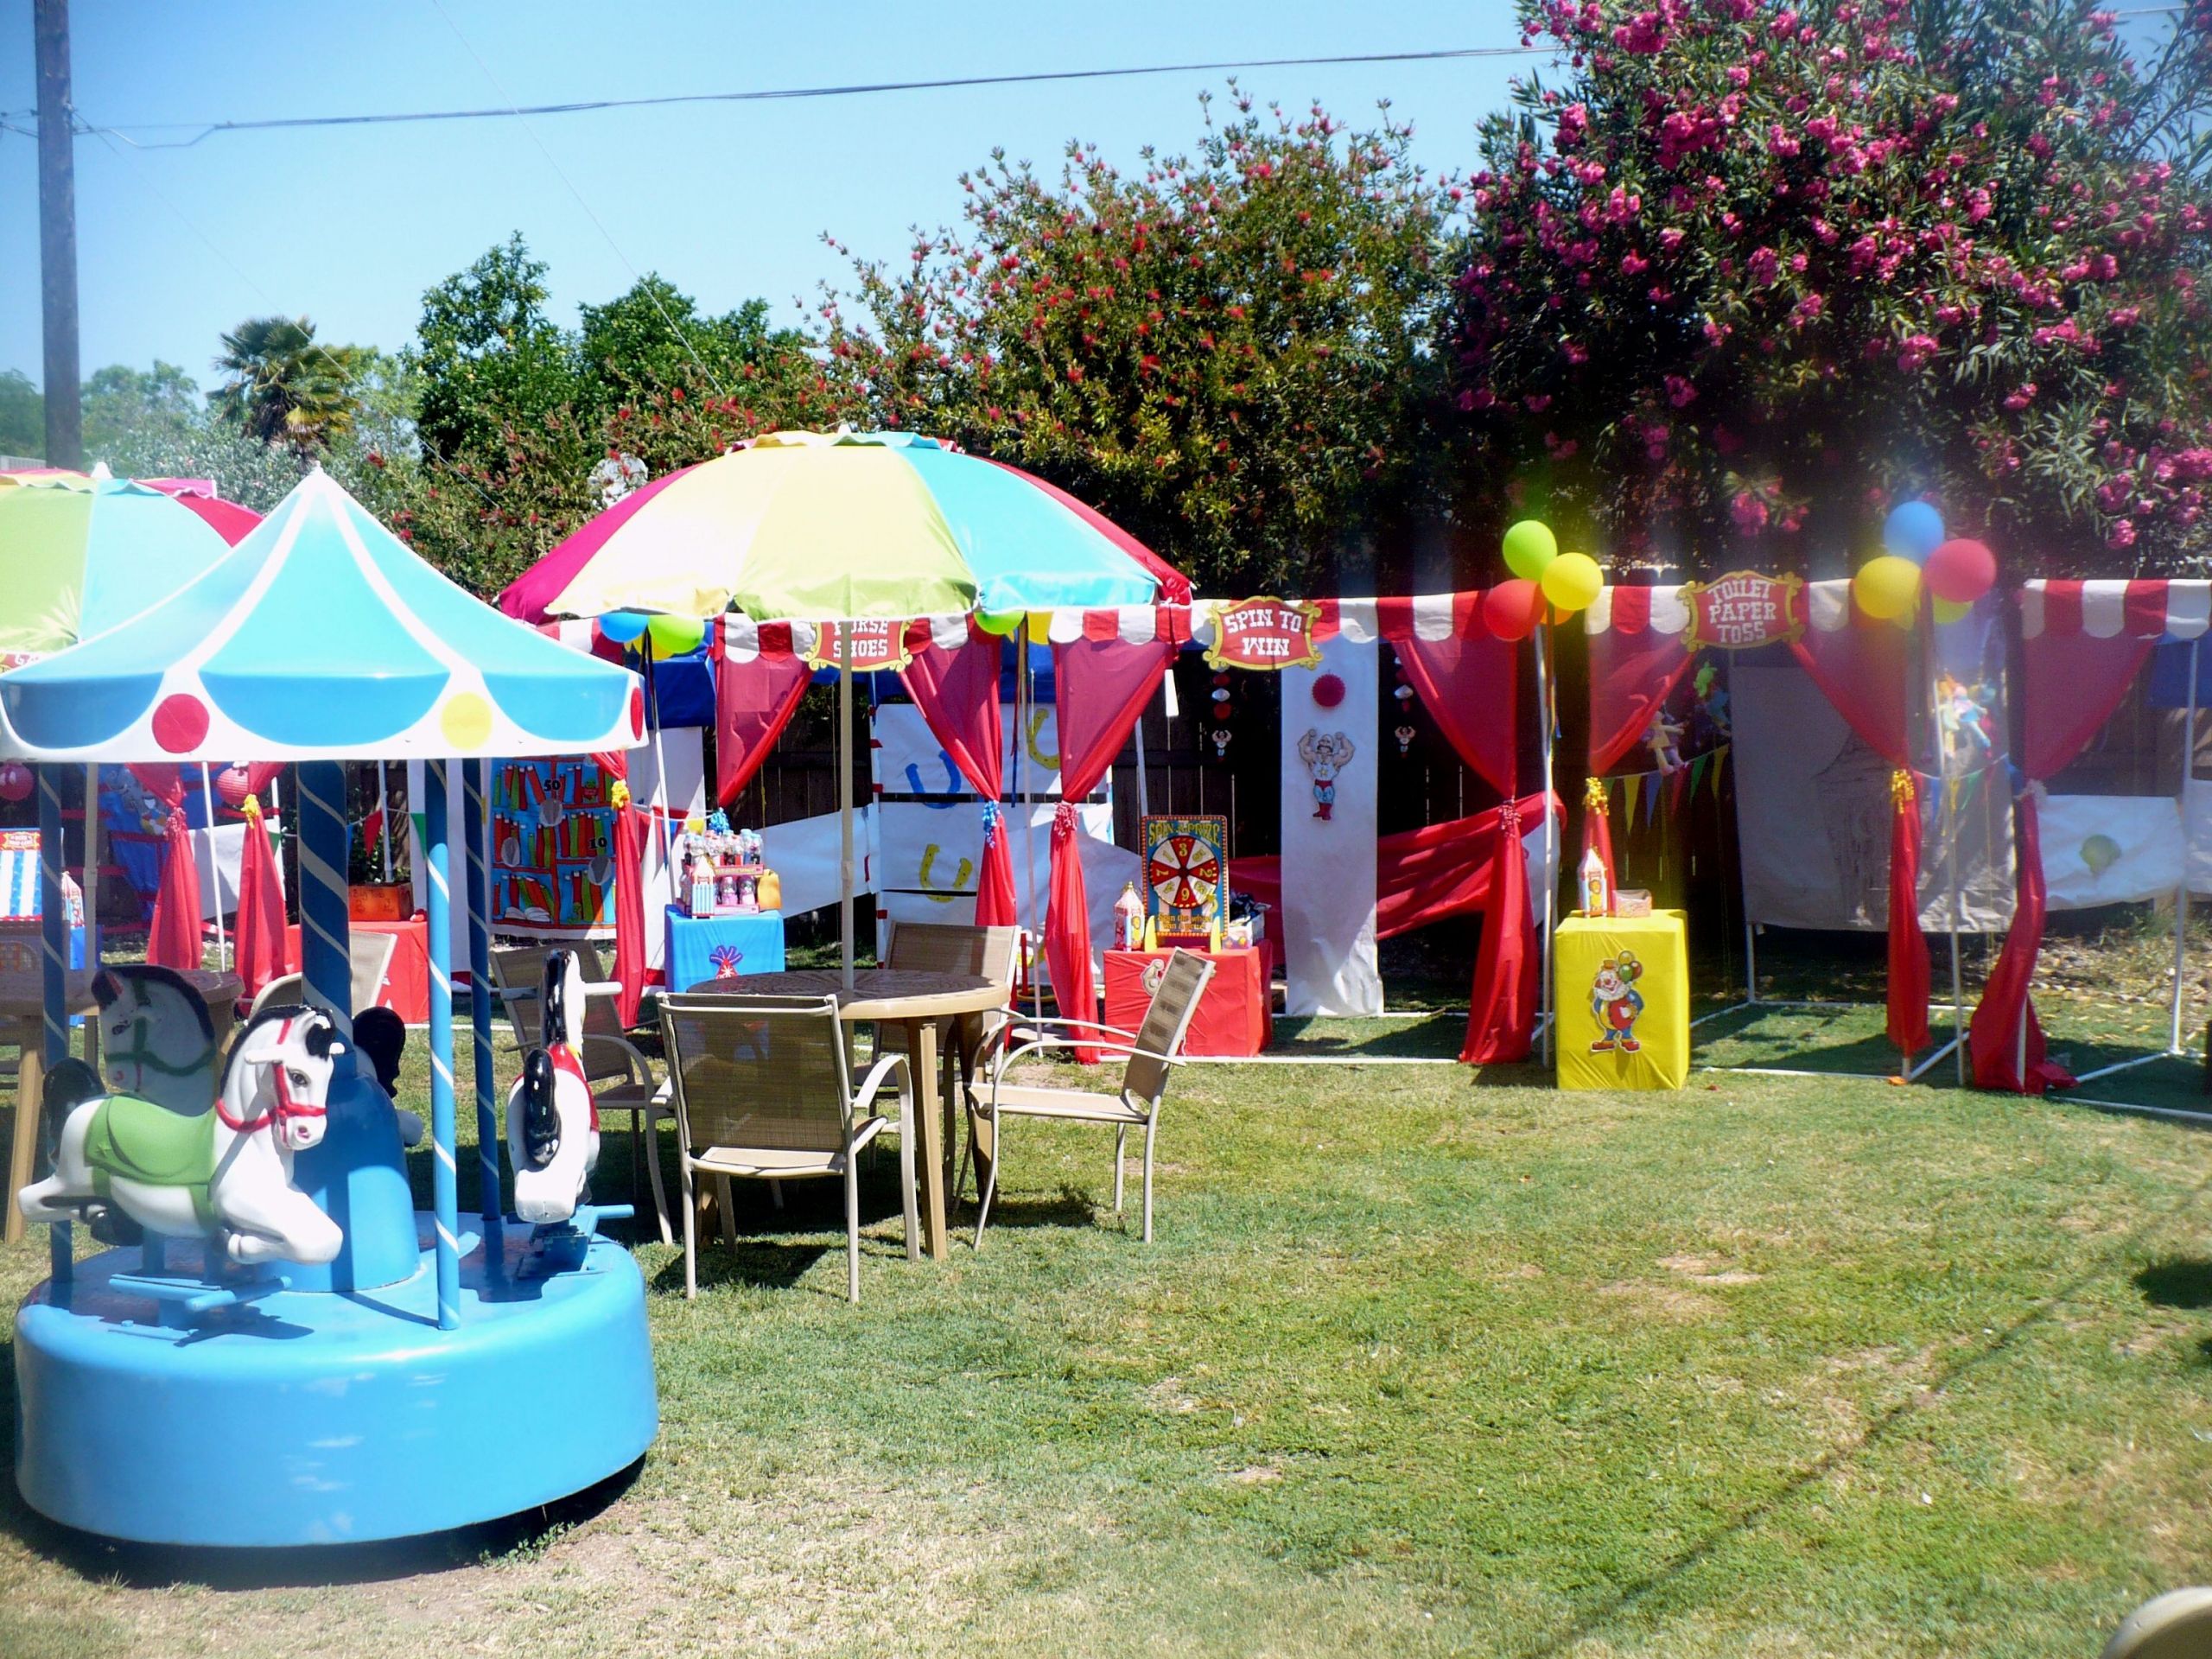 Backyard Carnival Theme Party Ideas
 The back yard carnival birthday party